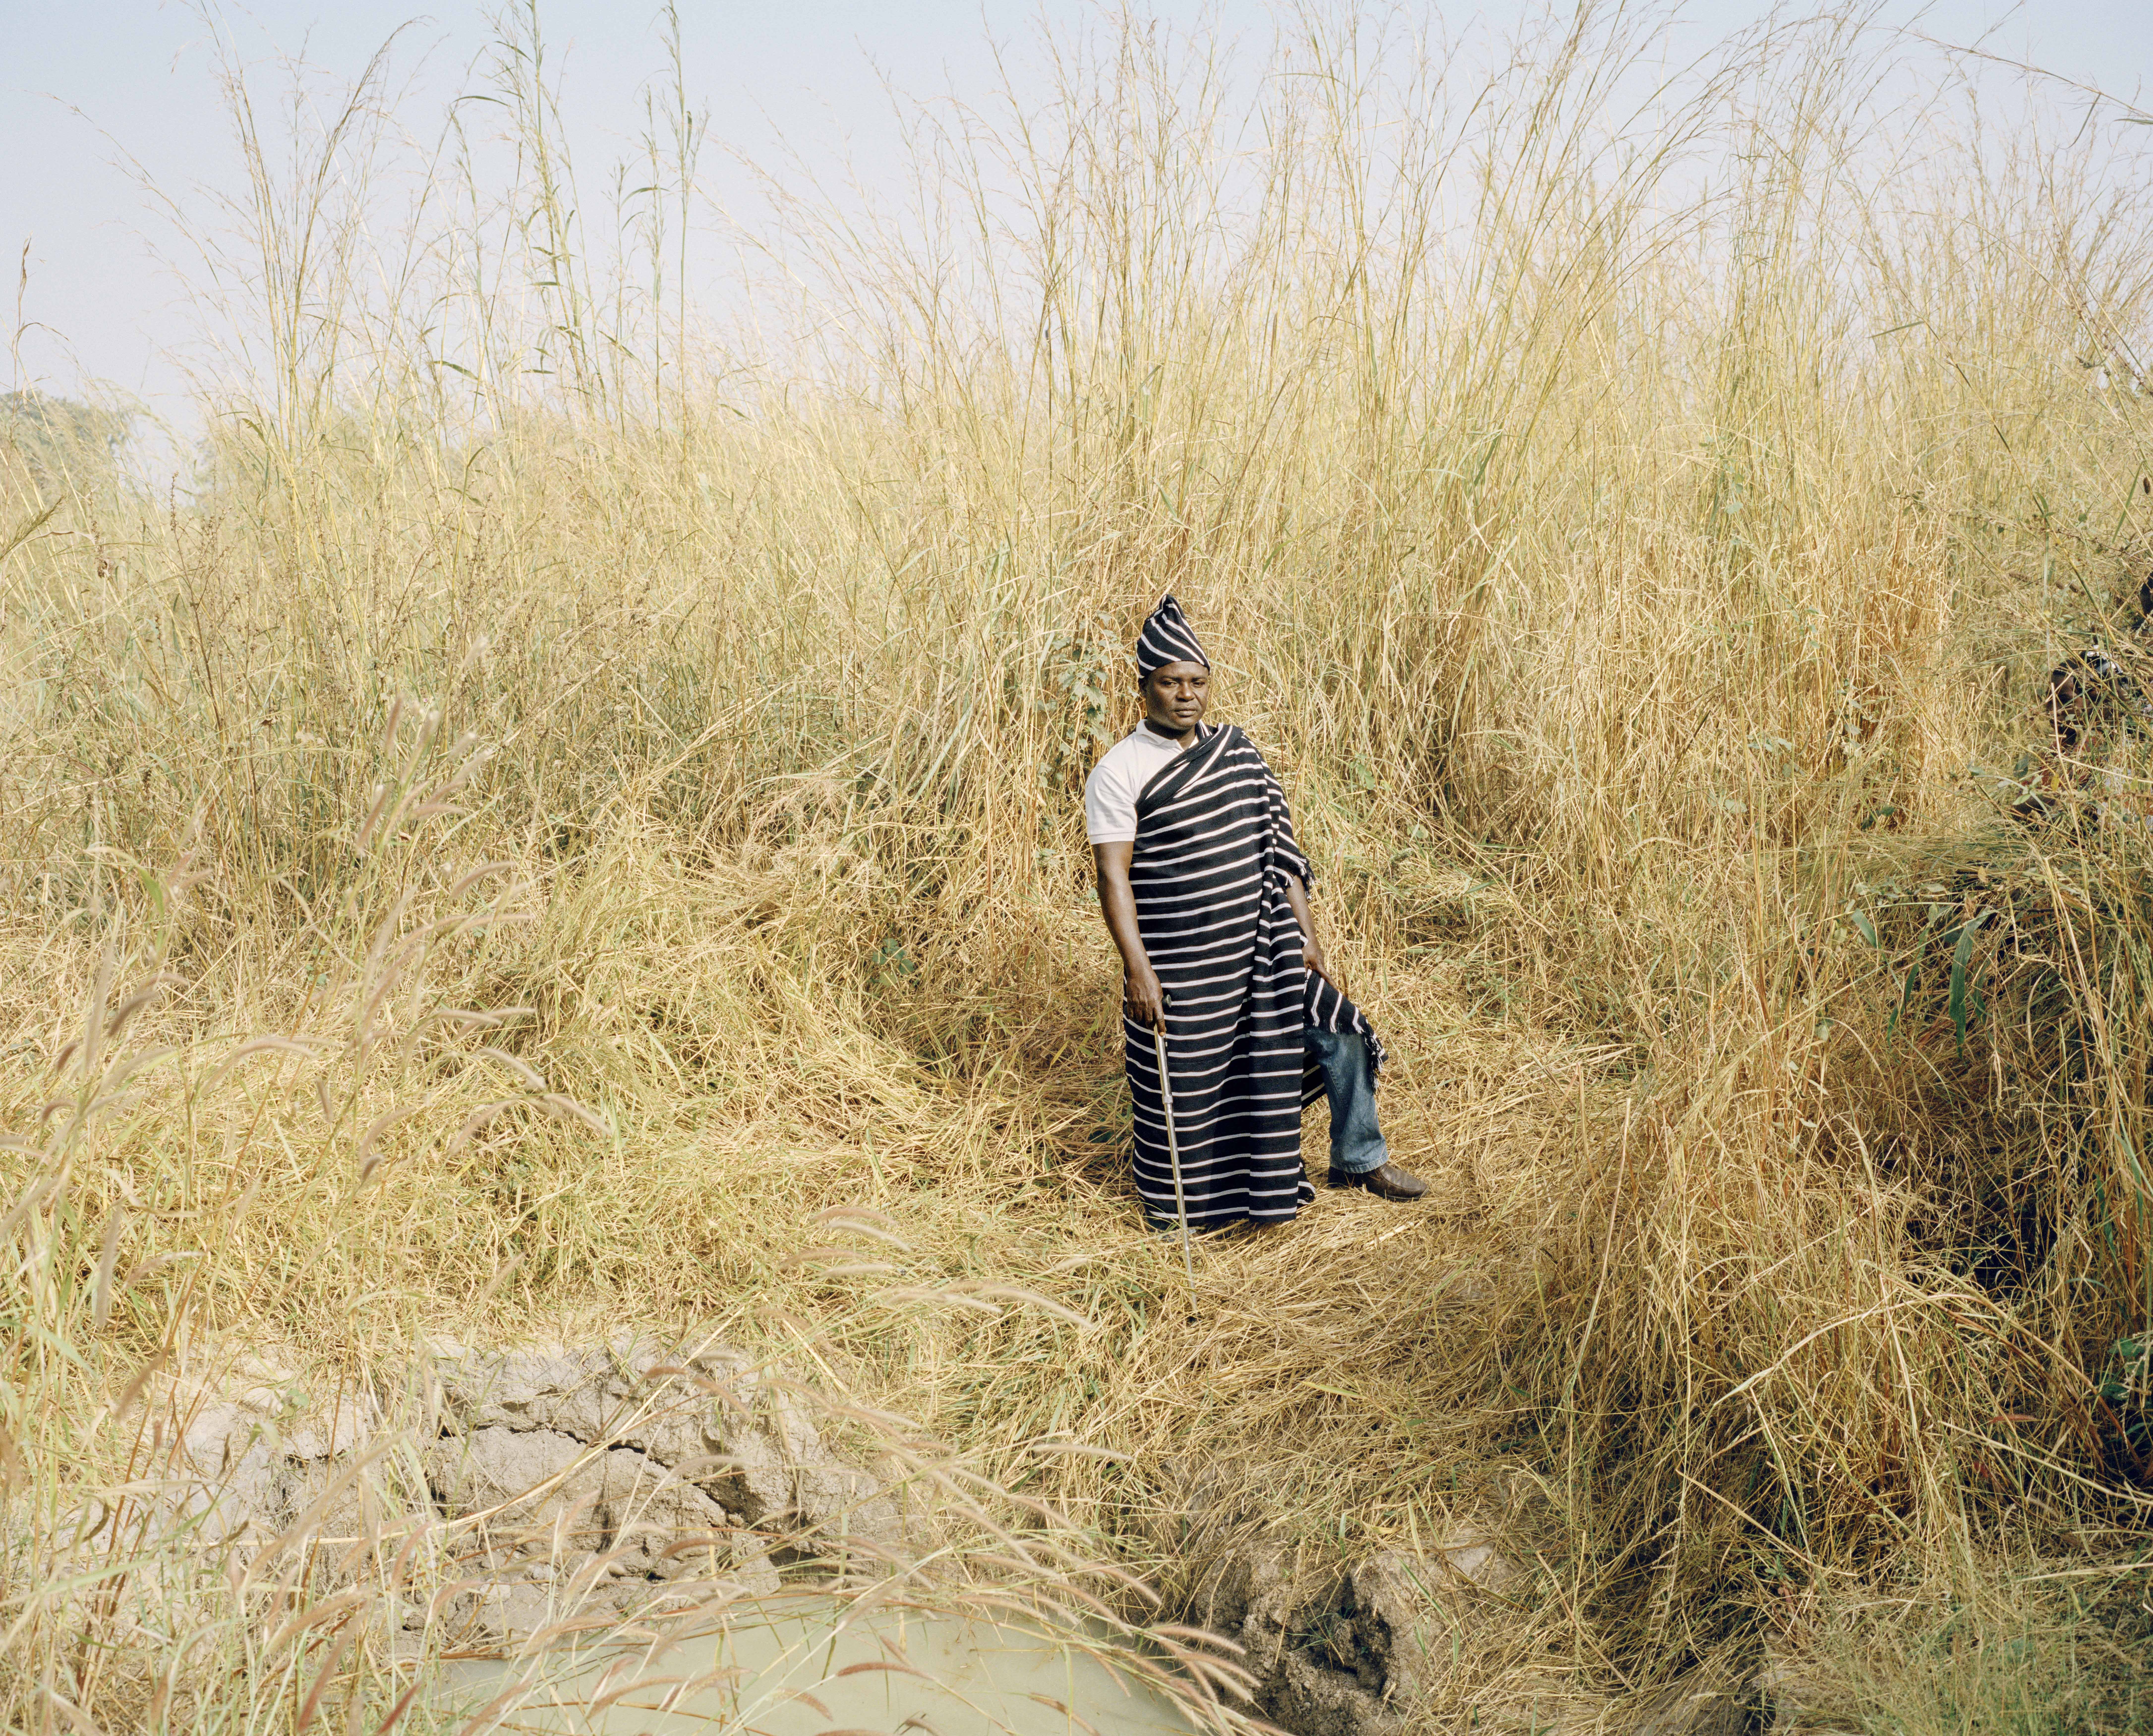 Mustafah Abdulaziz – Water Stories photography exhibition